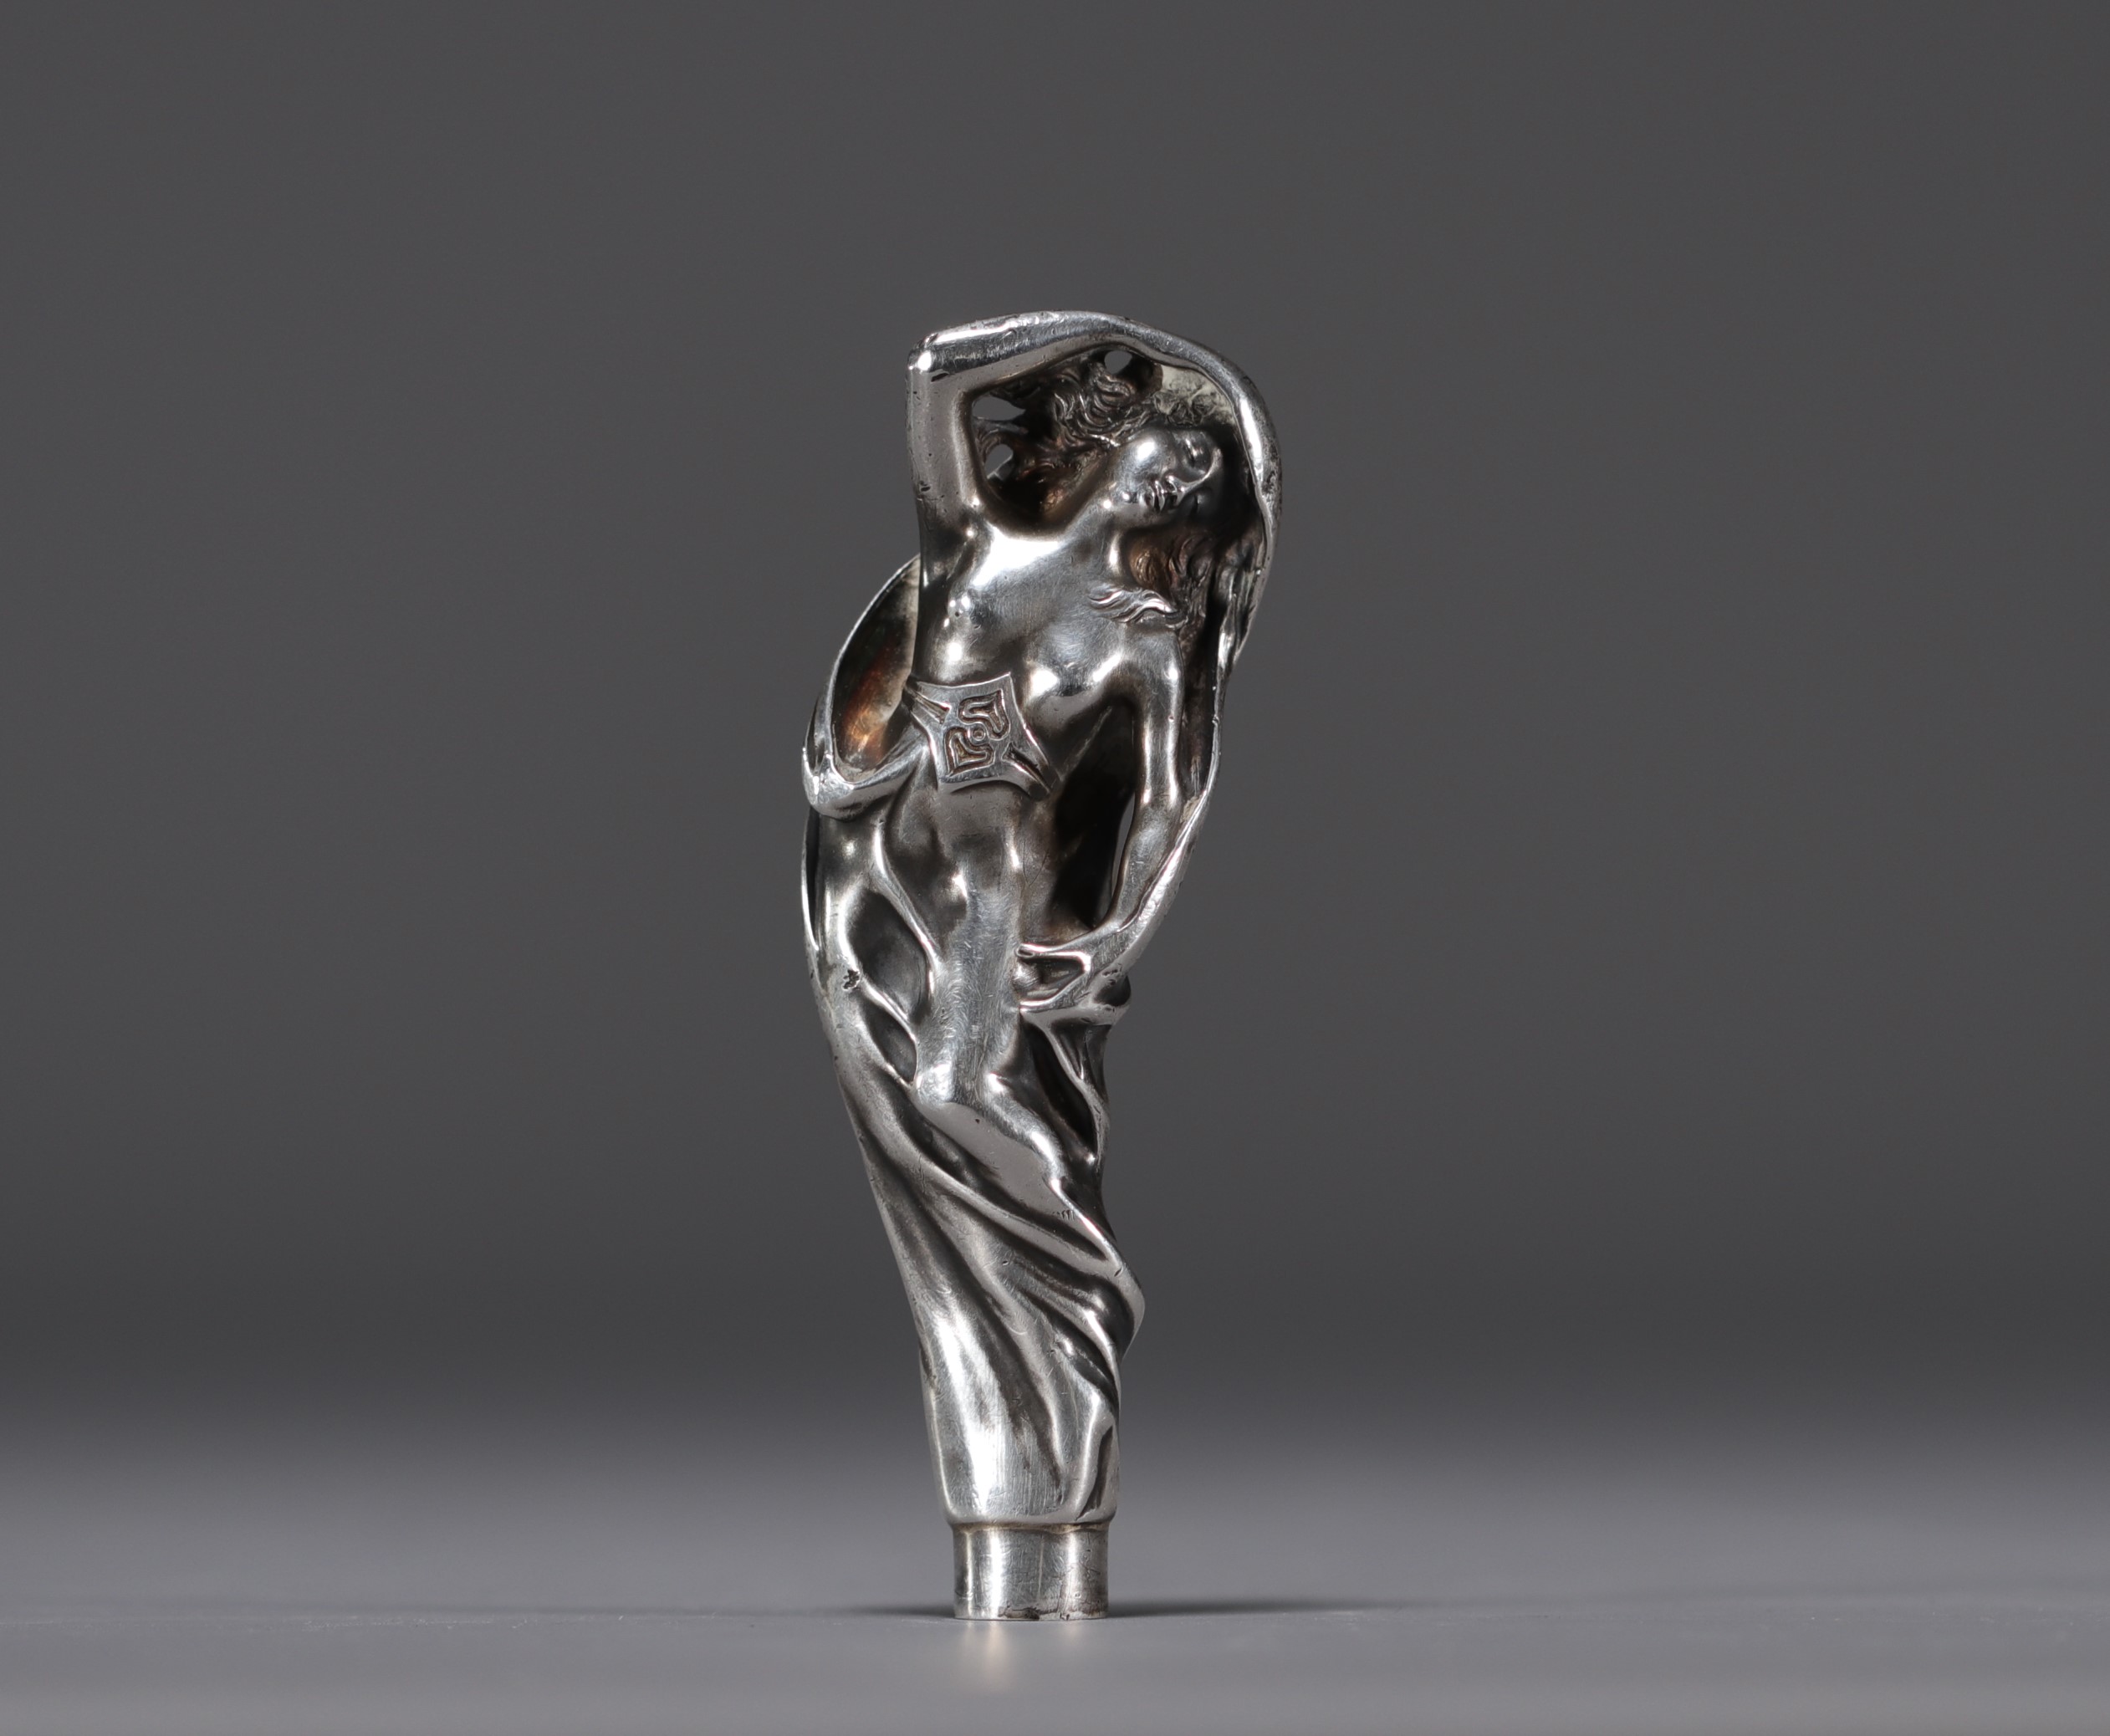 Antonio ALVES "J Pinto" - Art Nouveau cane knob representing a draped woman in solid silver.